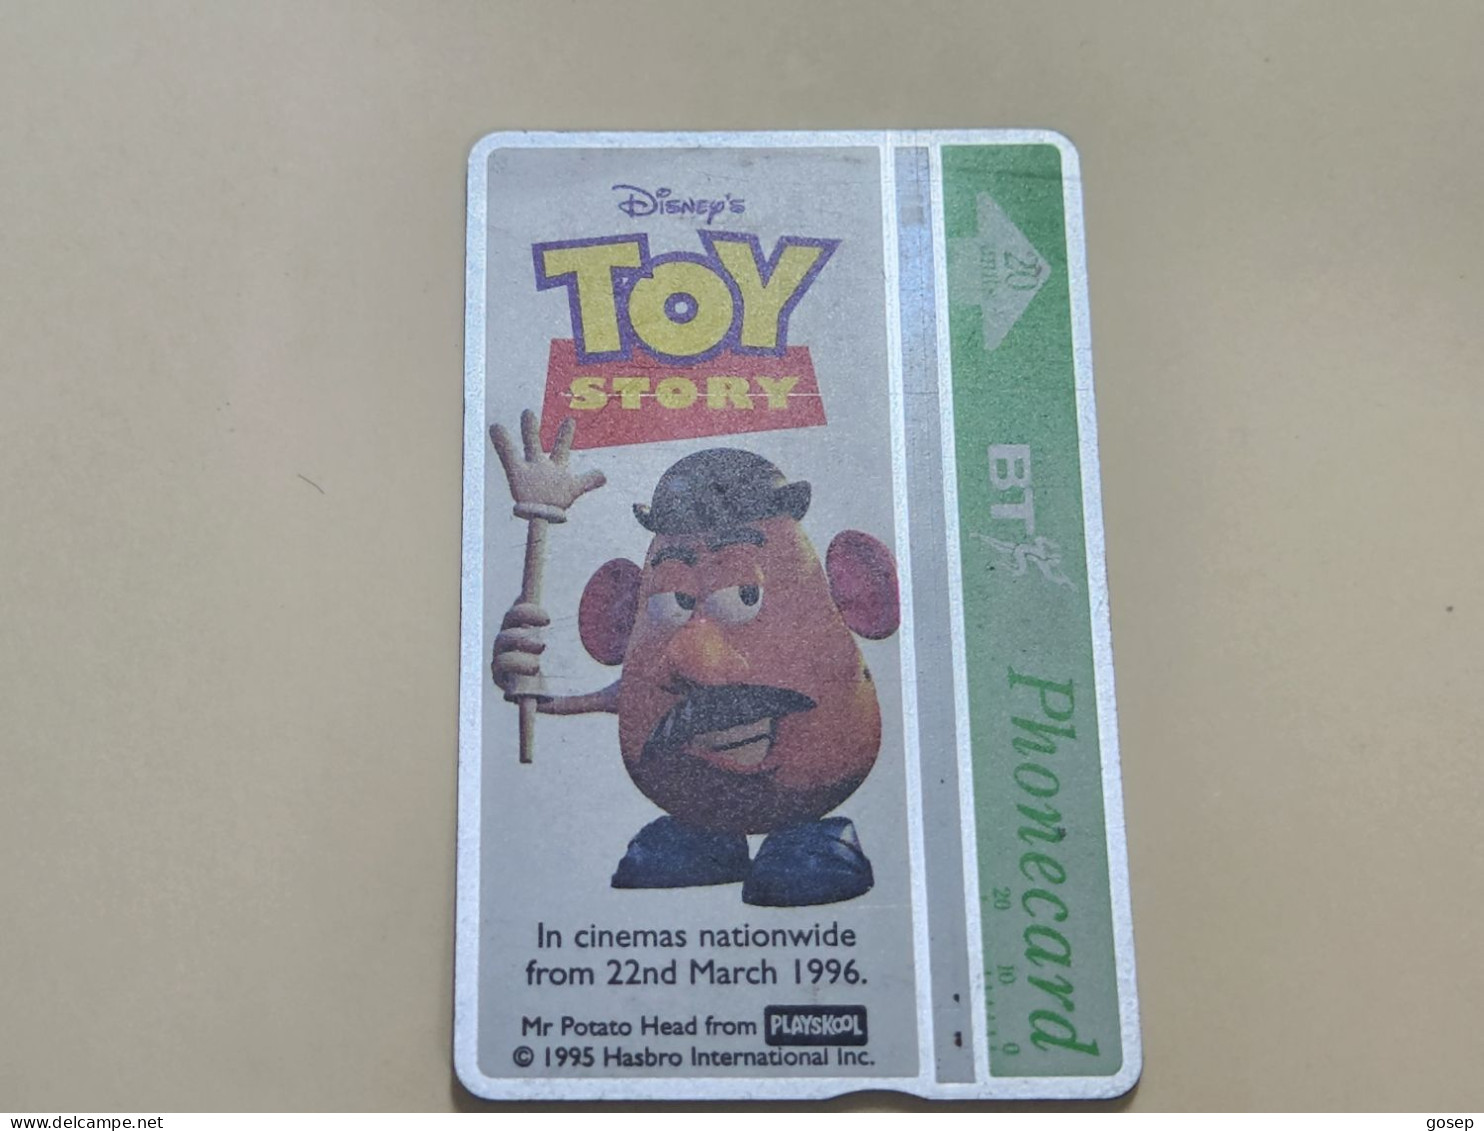 United Kingdom-(BTA148)Disney's Toy-1potato Head-(244)(20units)(662B07796)-price Cataloge 3.00£-used+1card Prepiad Free - BT Werbezwecke